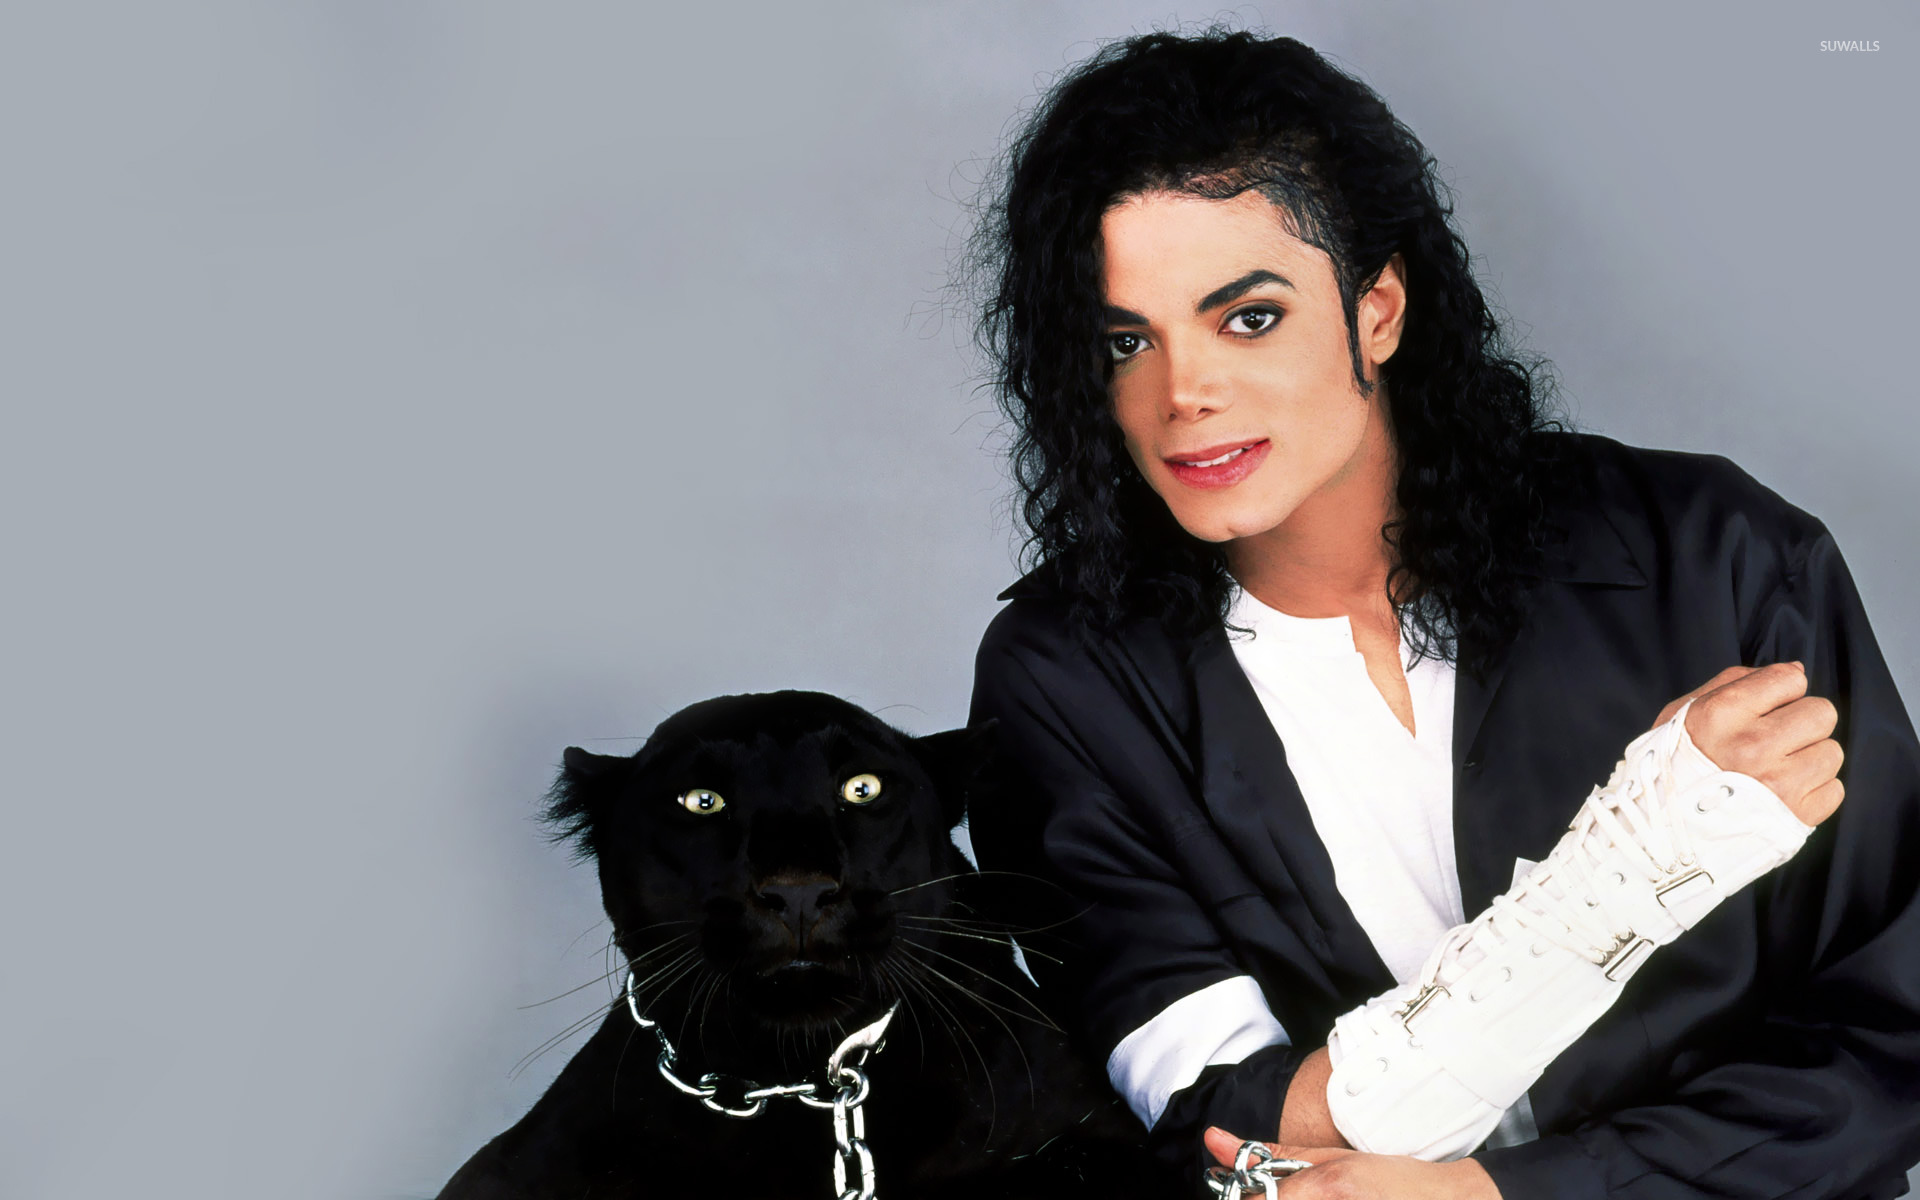 MJ0120-1 - Michael Jackson Wallpaper (18574832) - Fanpop